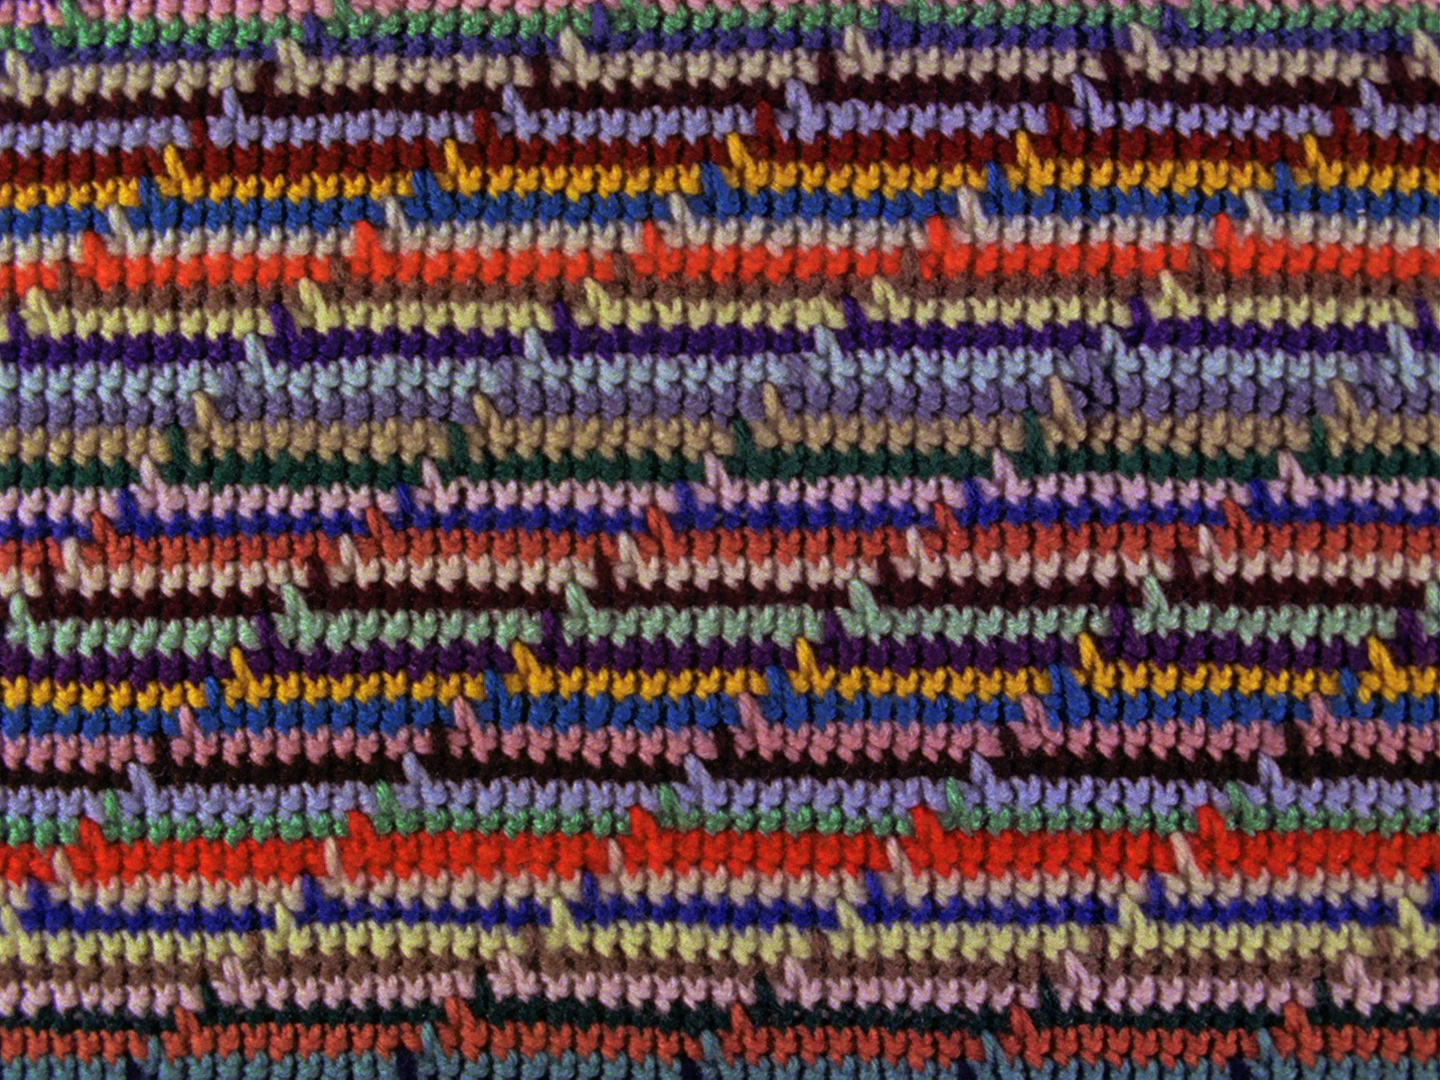 Blanket Statement 1 Still: Colored knit pattern